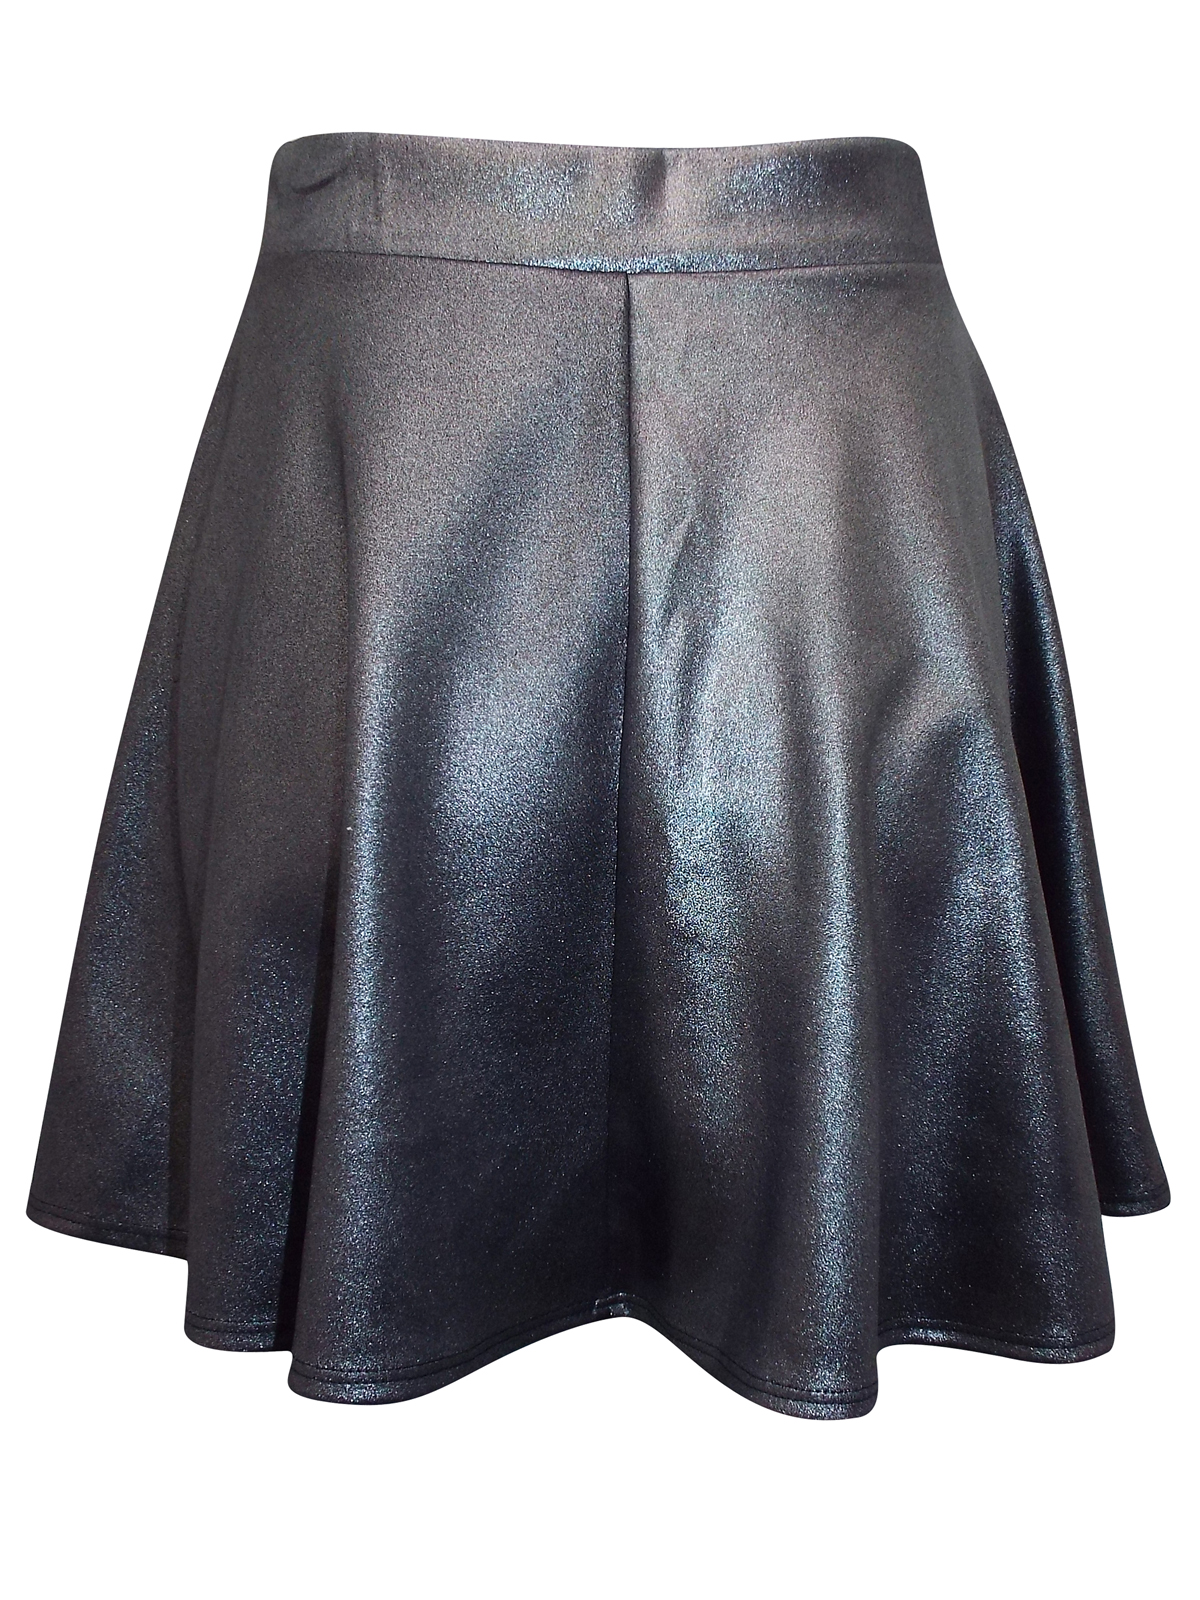 Miss Selfridge - - M1ss S3lfridge SILVER Metallic Skater Skirt - Size 6 ...